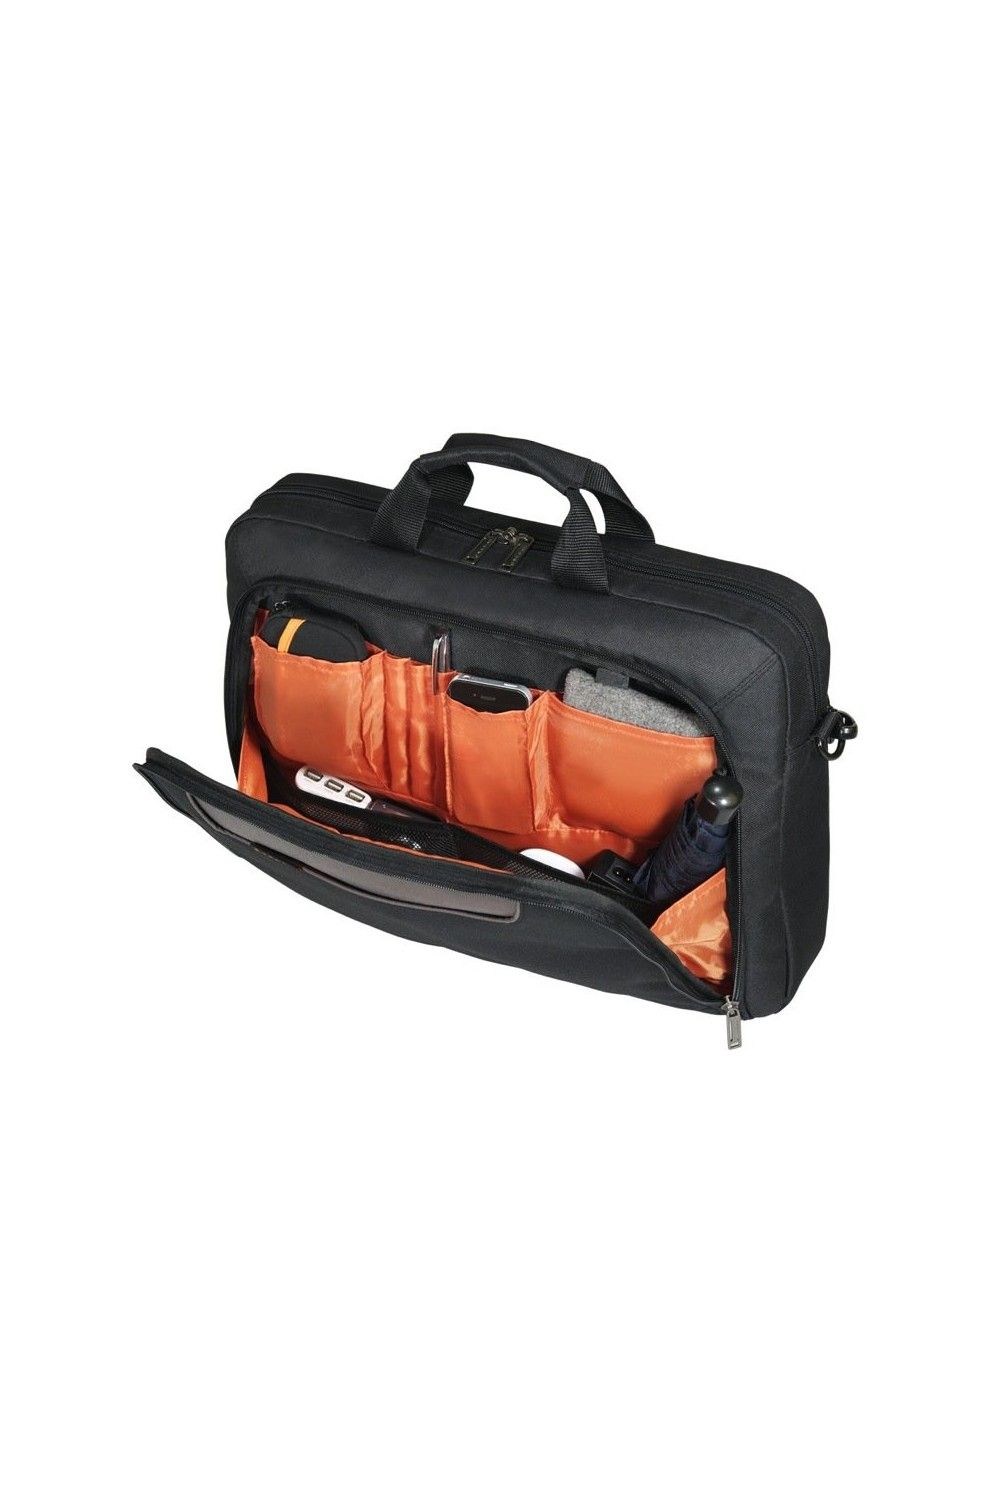 Laptop bag Advance Everki 17.3 inches